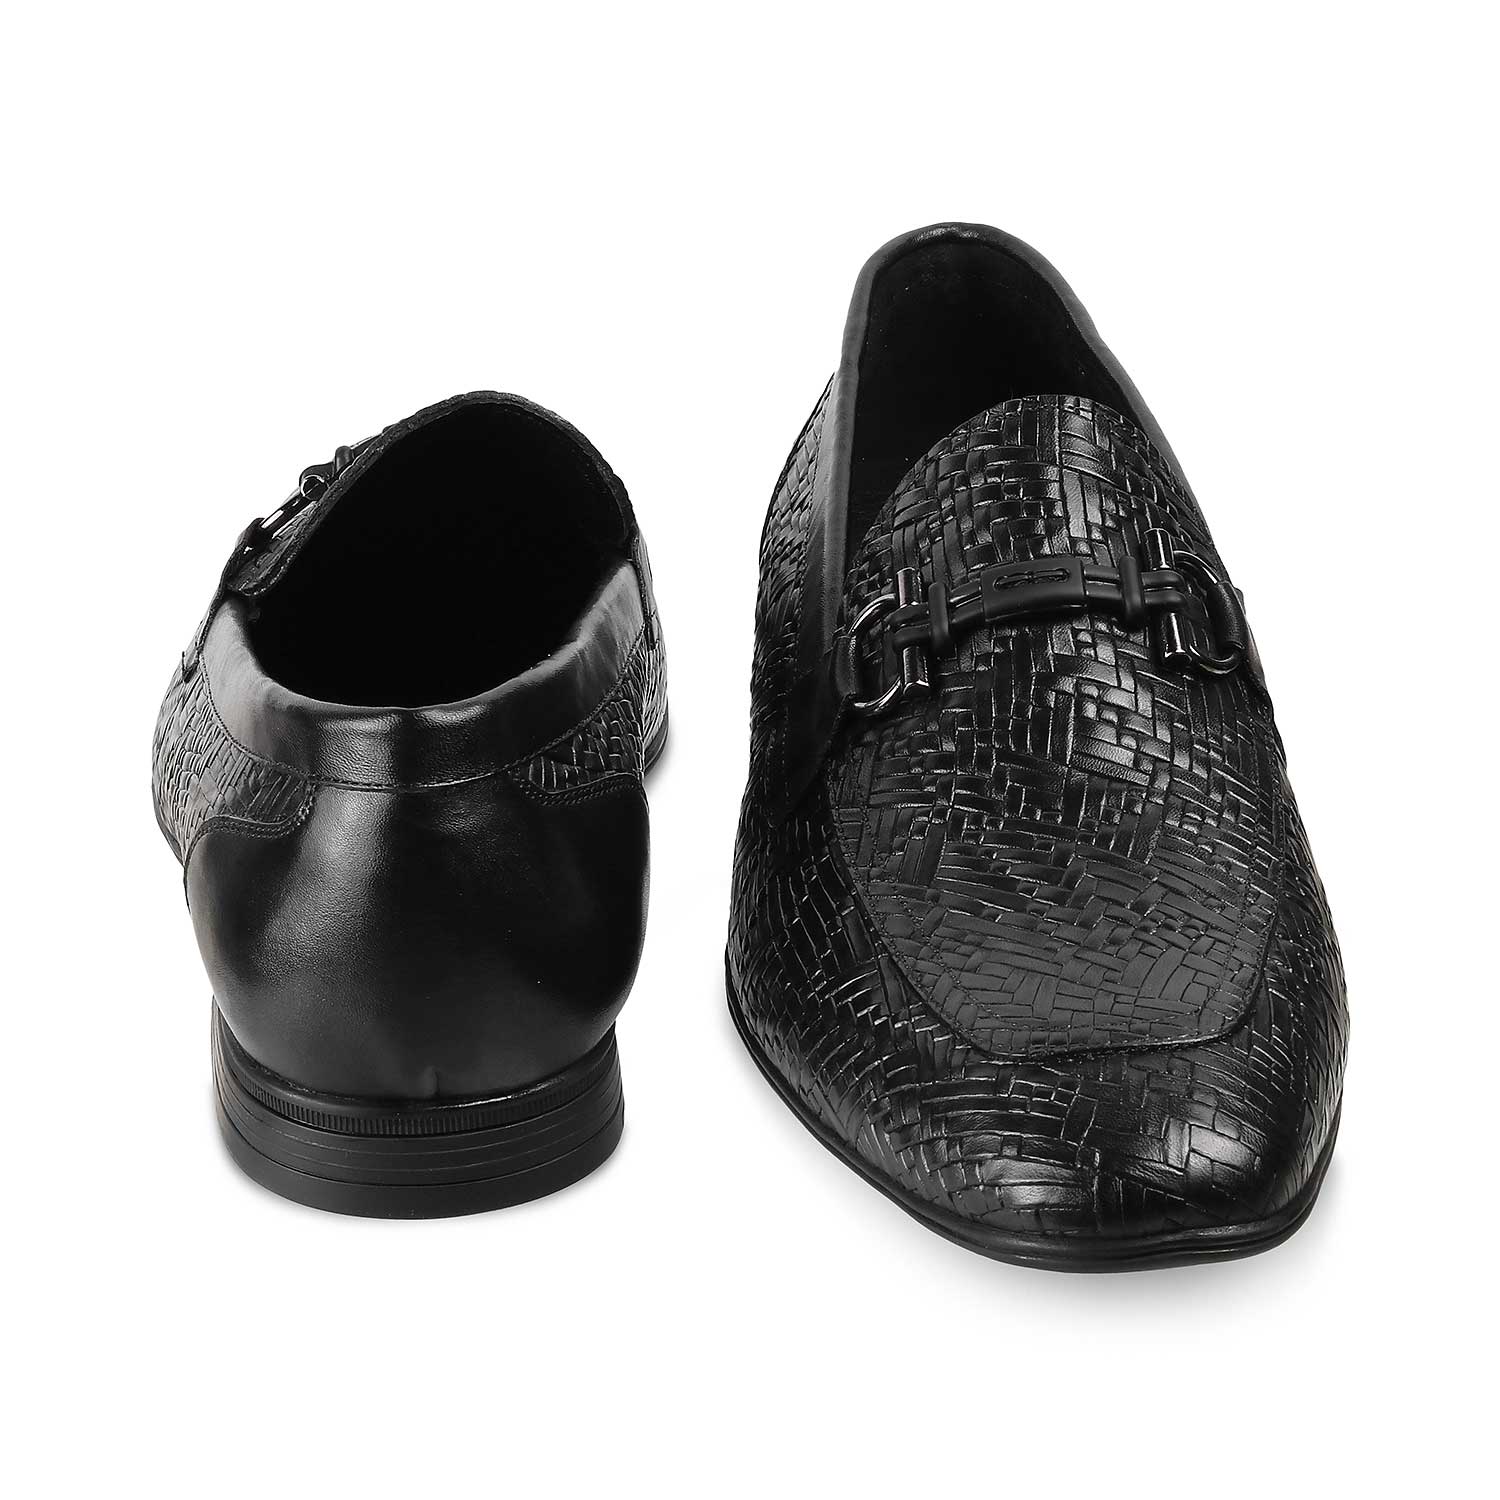 Crint Black Men's Leather Loafers Online at Tresmode.com